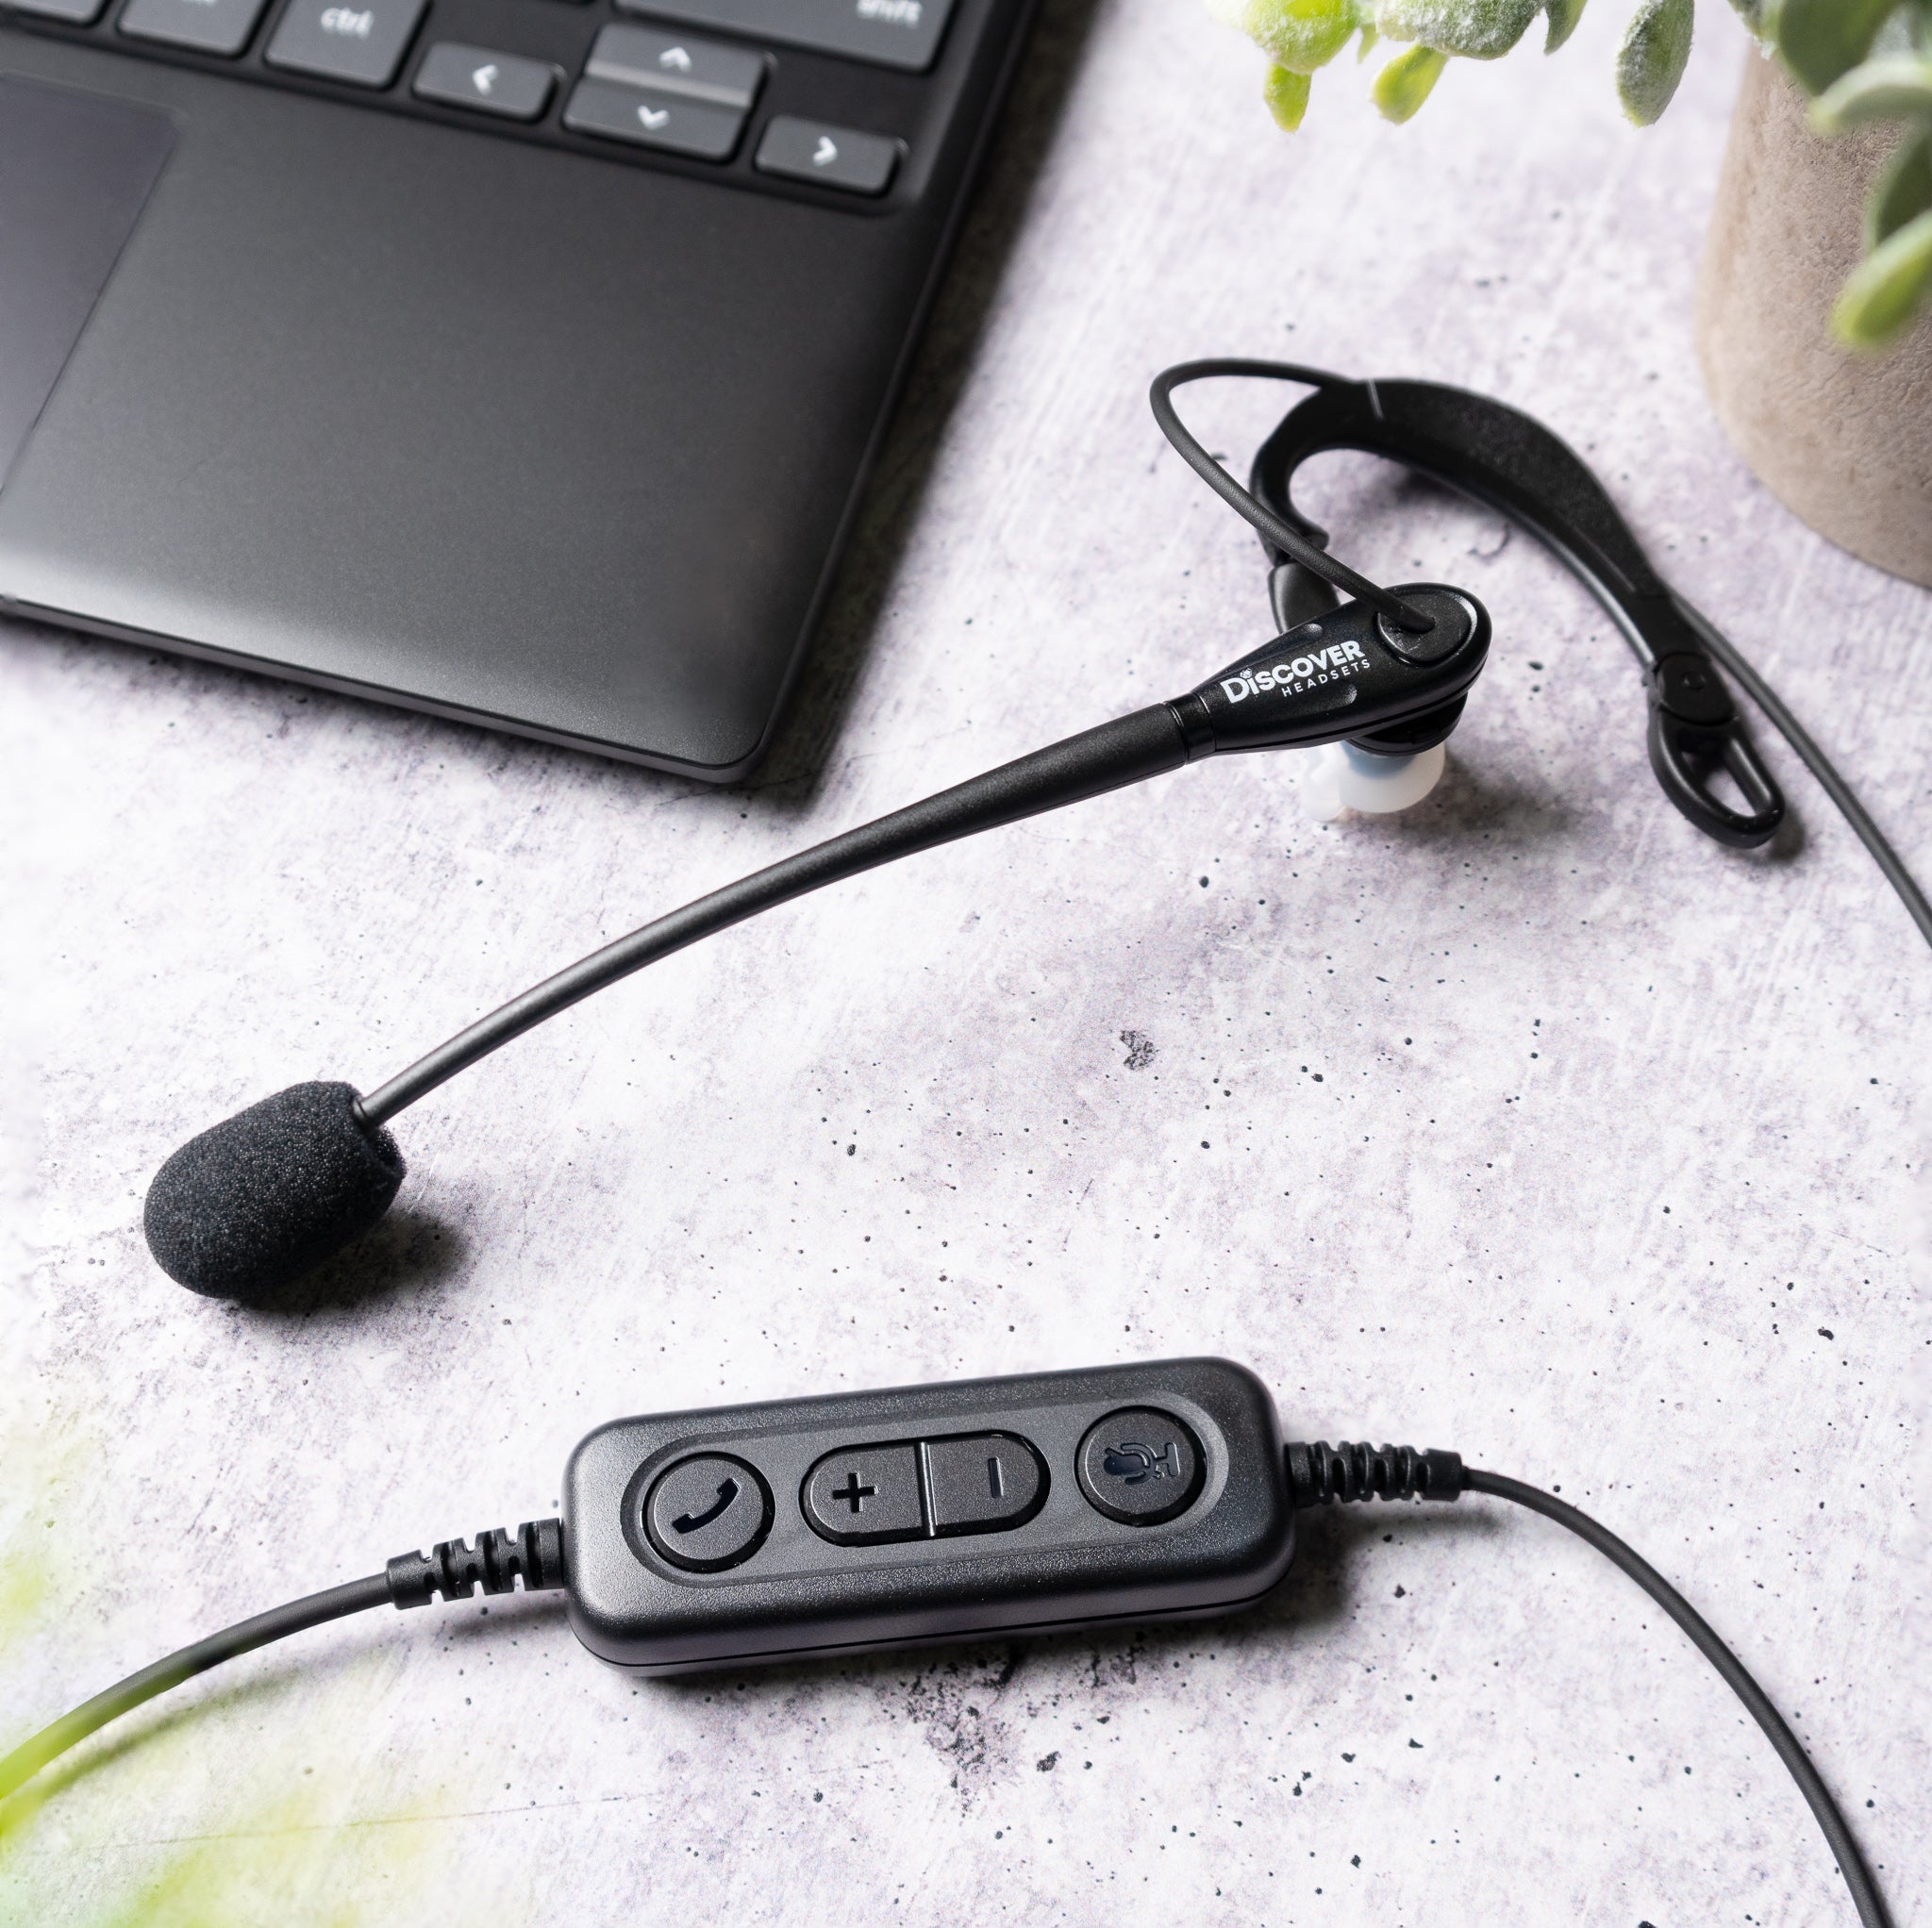 Discover D713U On-Ear USB Wired Headset - Headset Advisor